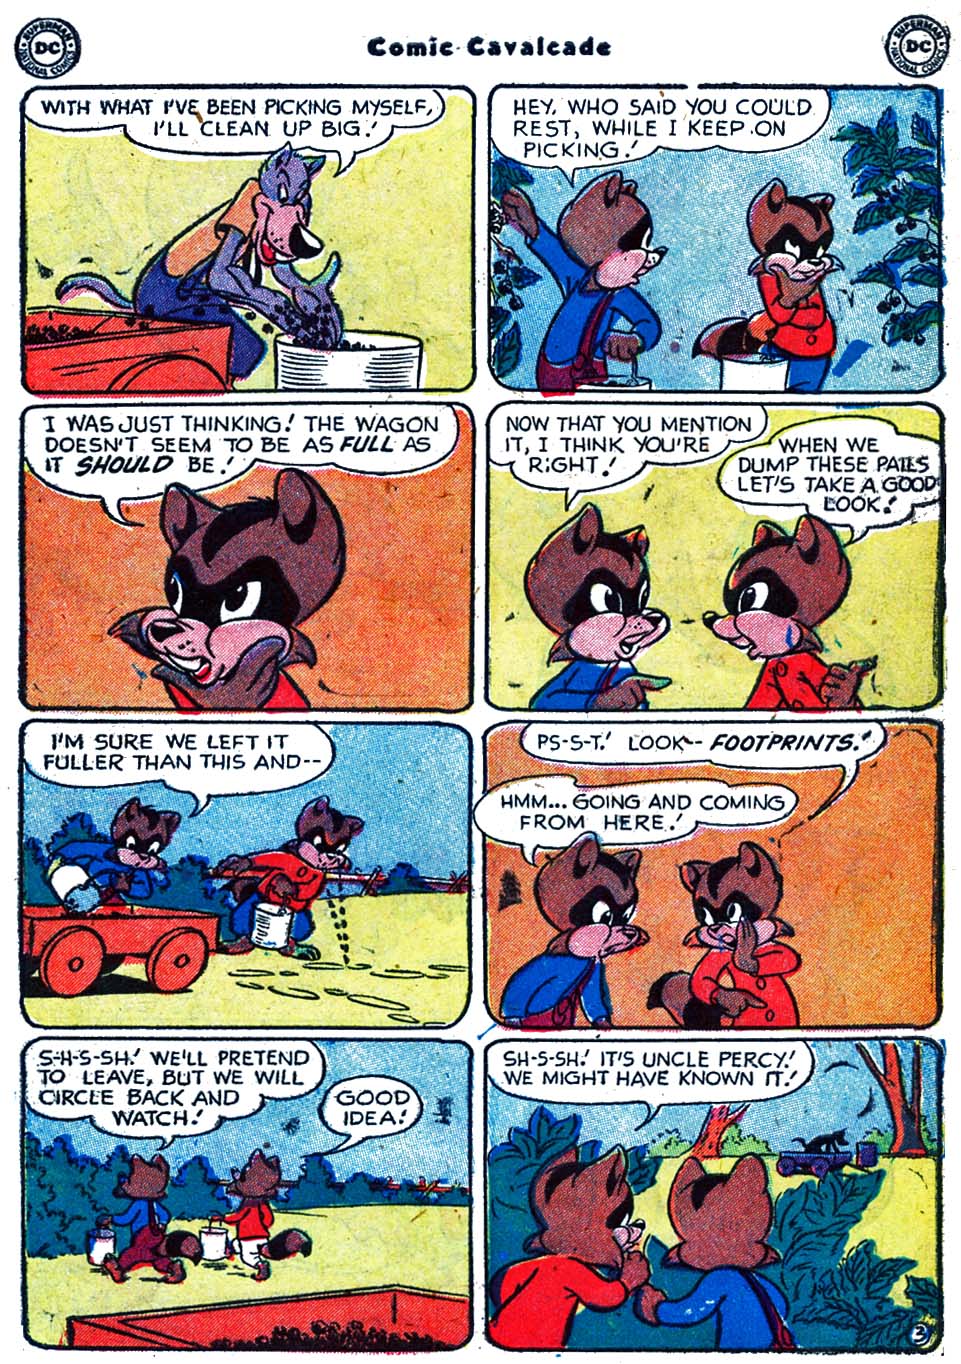 Comic Cavalcade issue 47 - Page 15